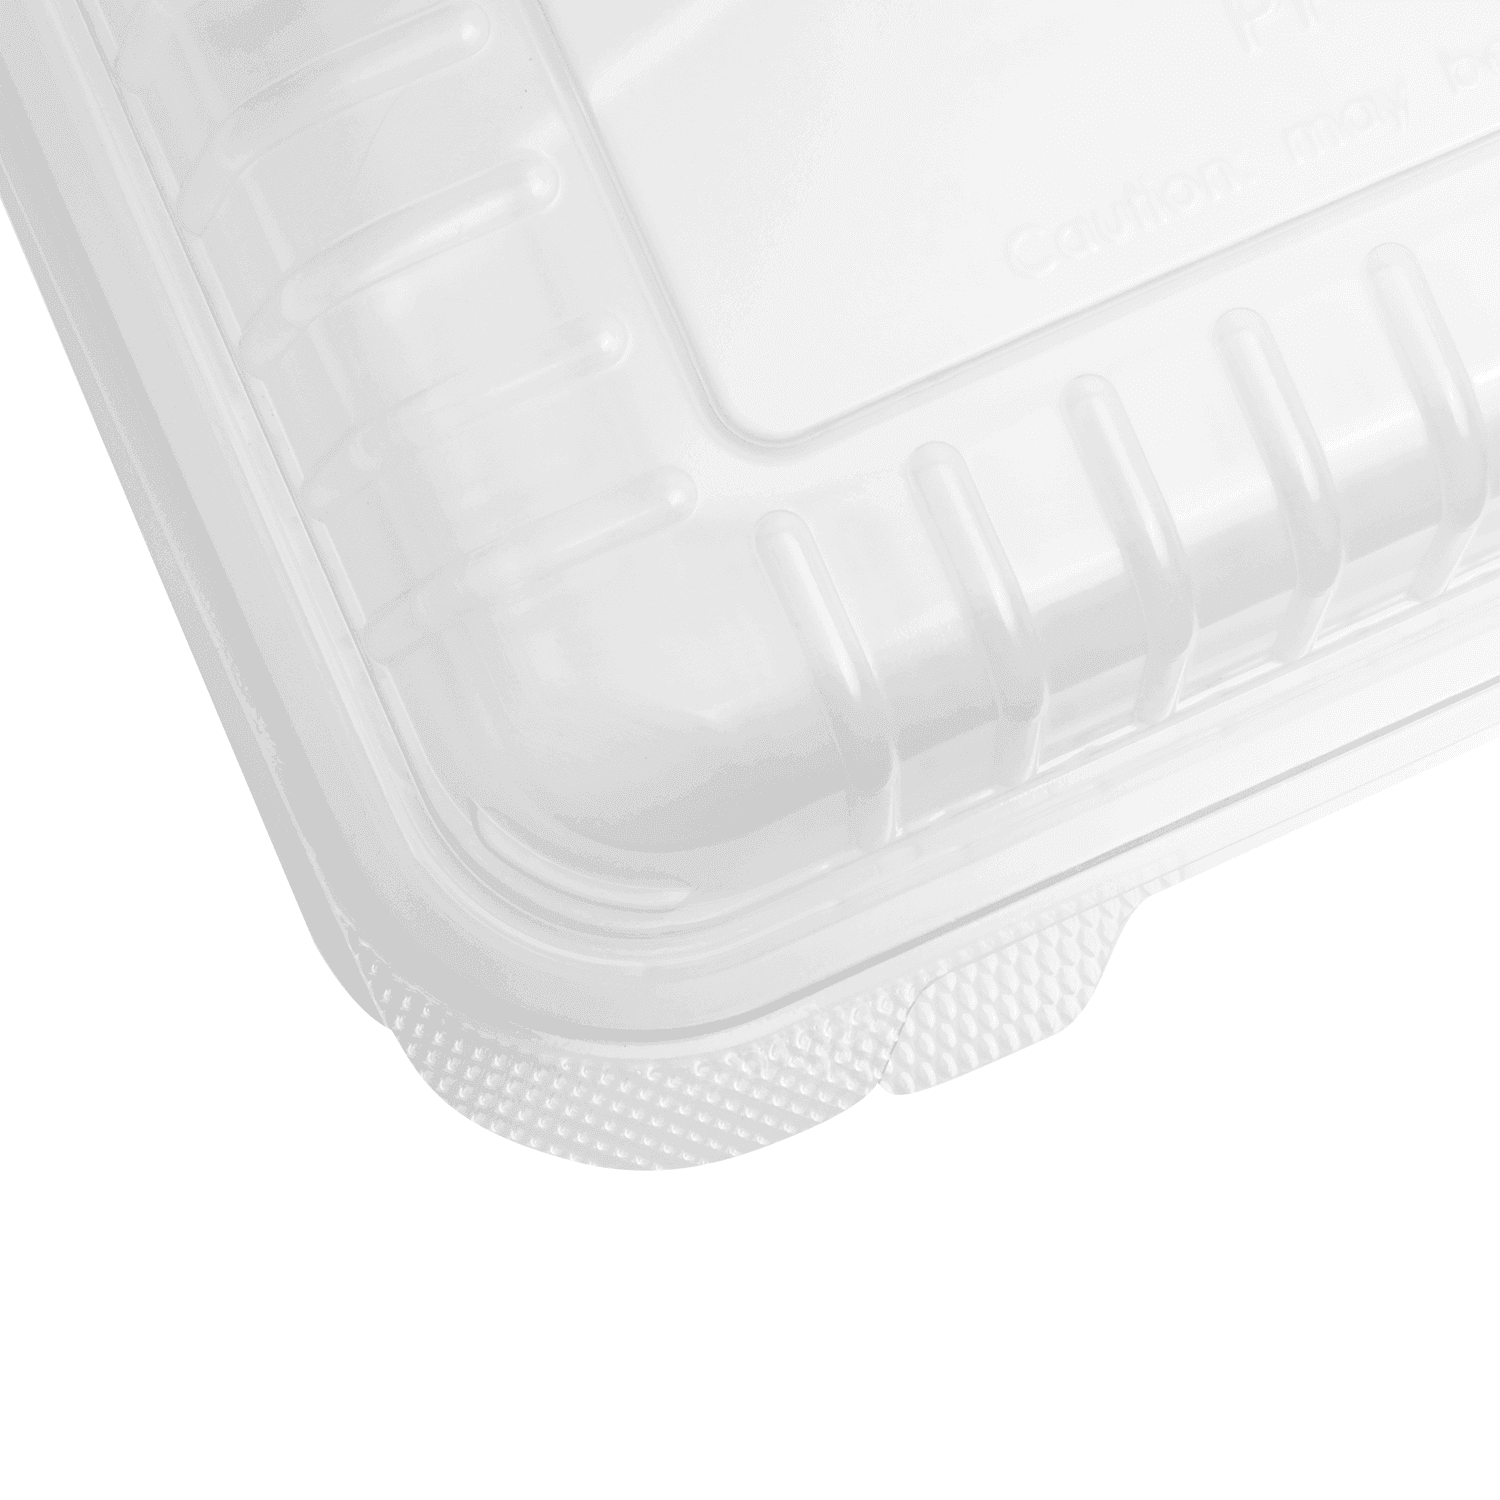 Karat 8'' x 8'' PP Plastic Hinged Container, 3 Compartments - 250 pcs